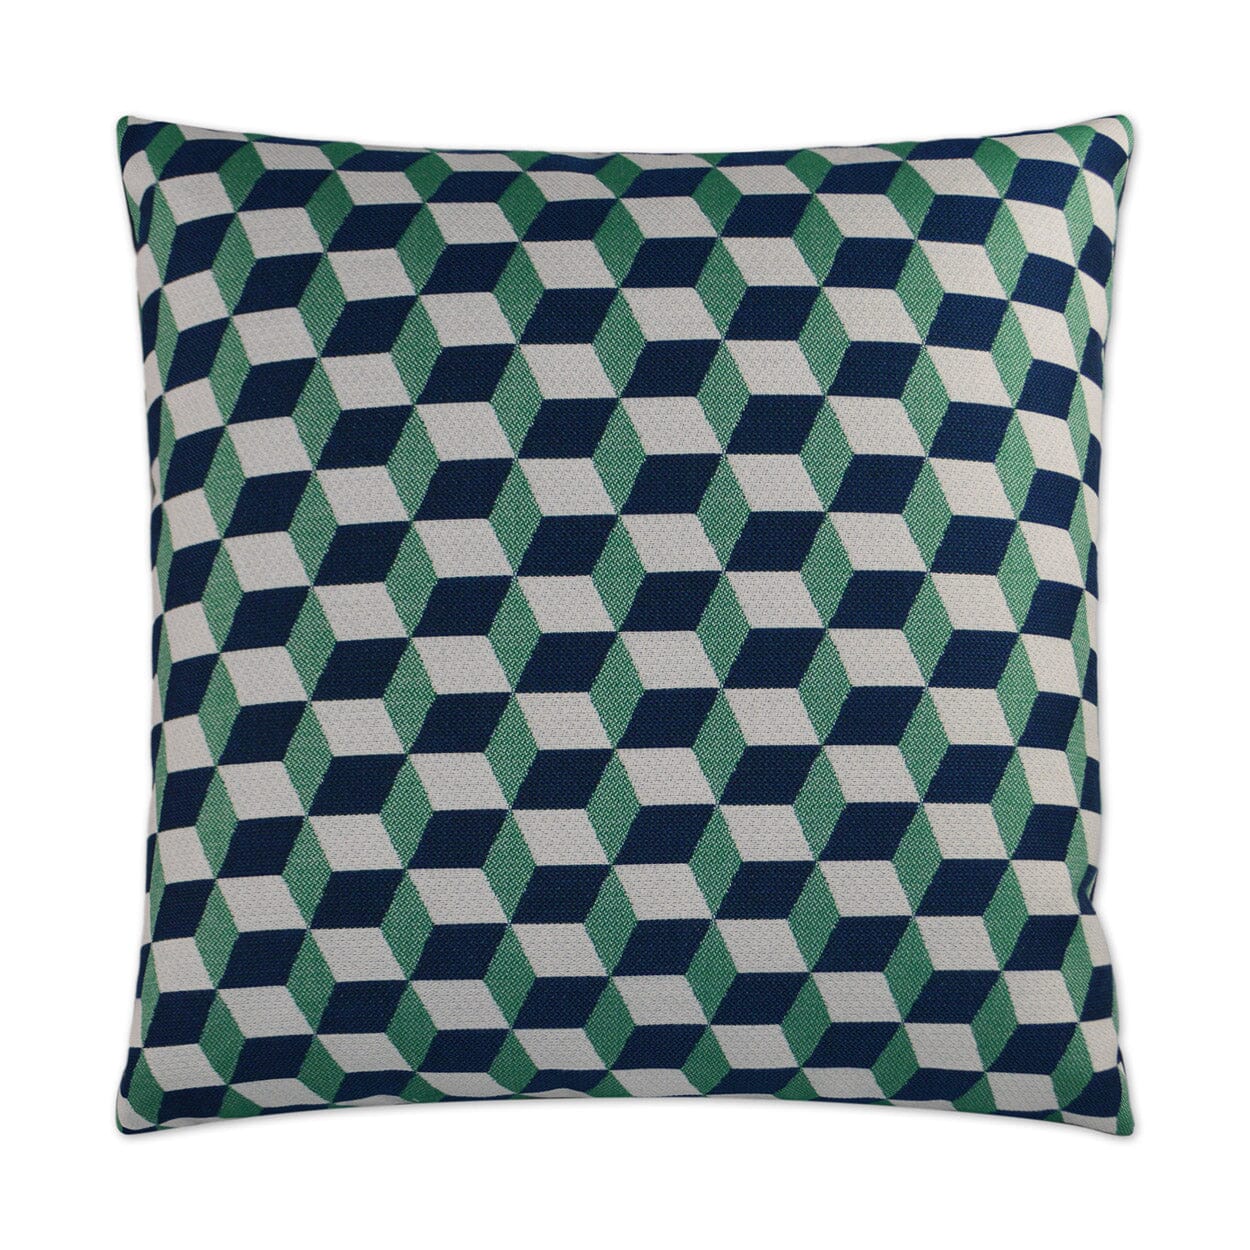 D.V. Kap 22" x 22" Outdoor Throw Pillow | Puzzle Emerald Pillows D.V Kap Outdoor